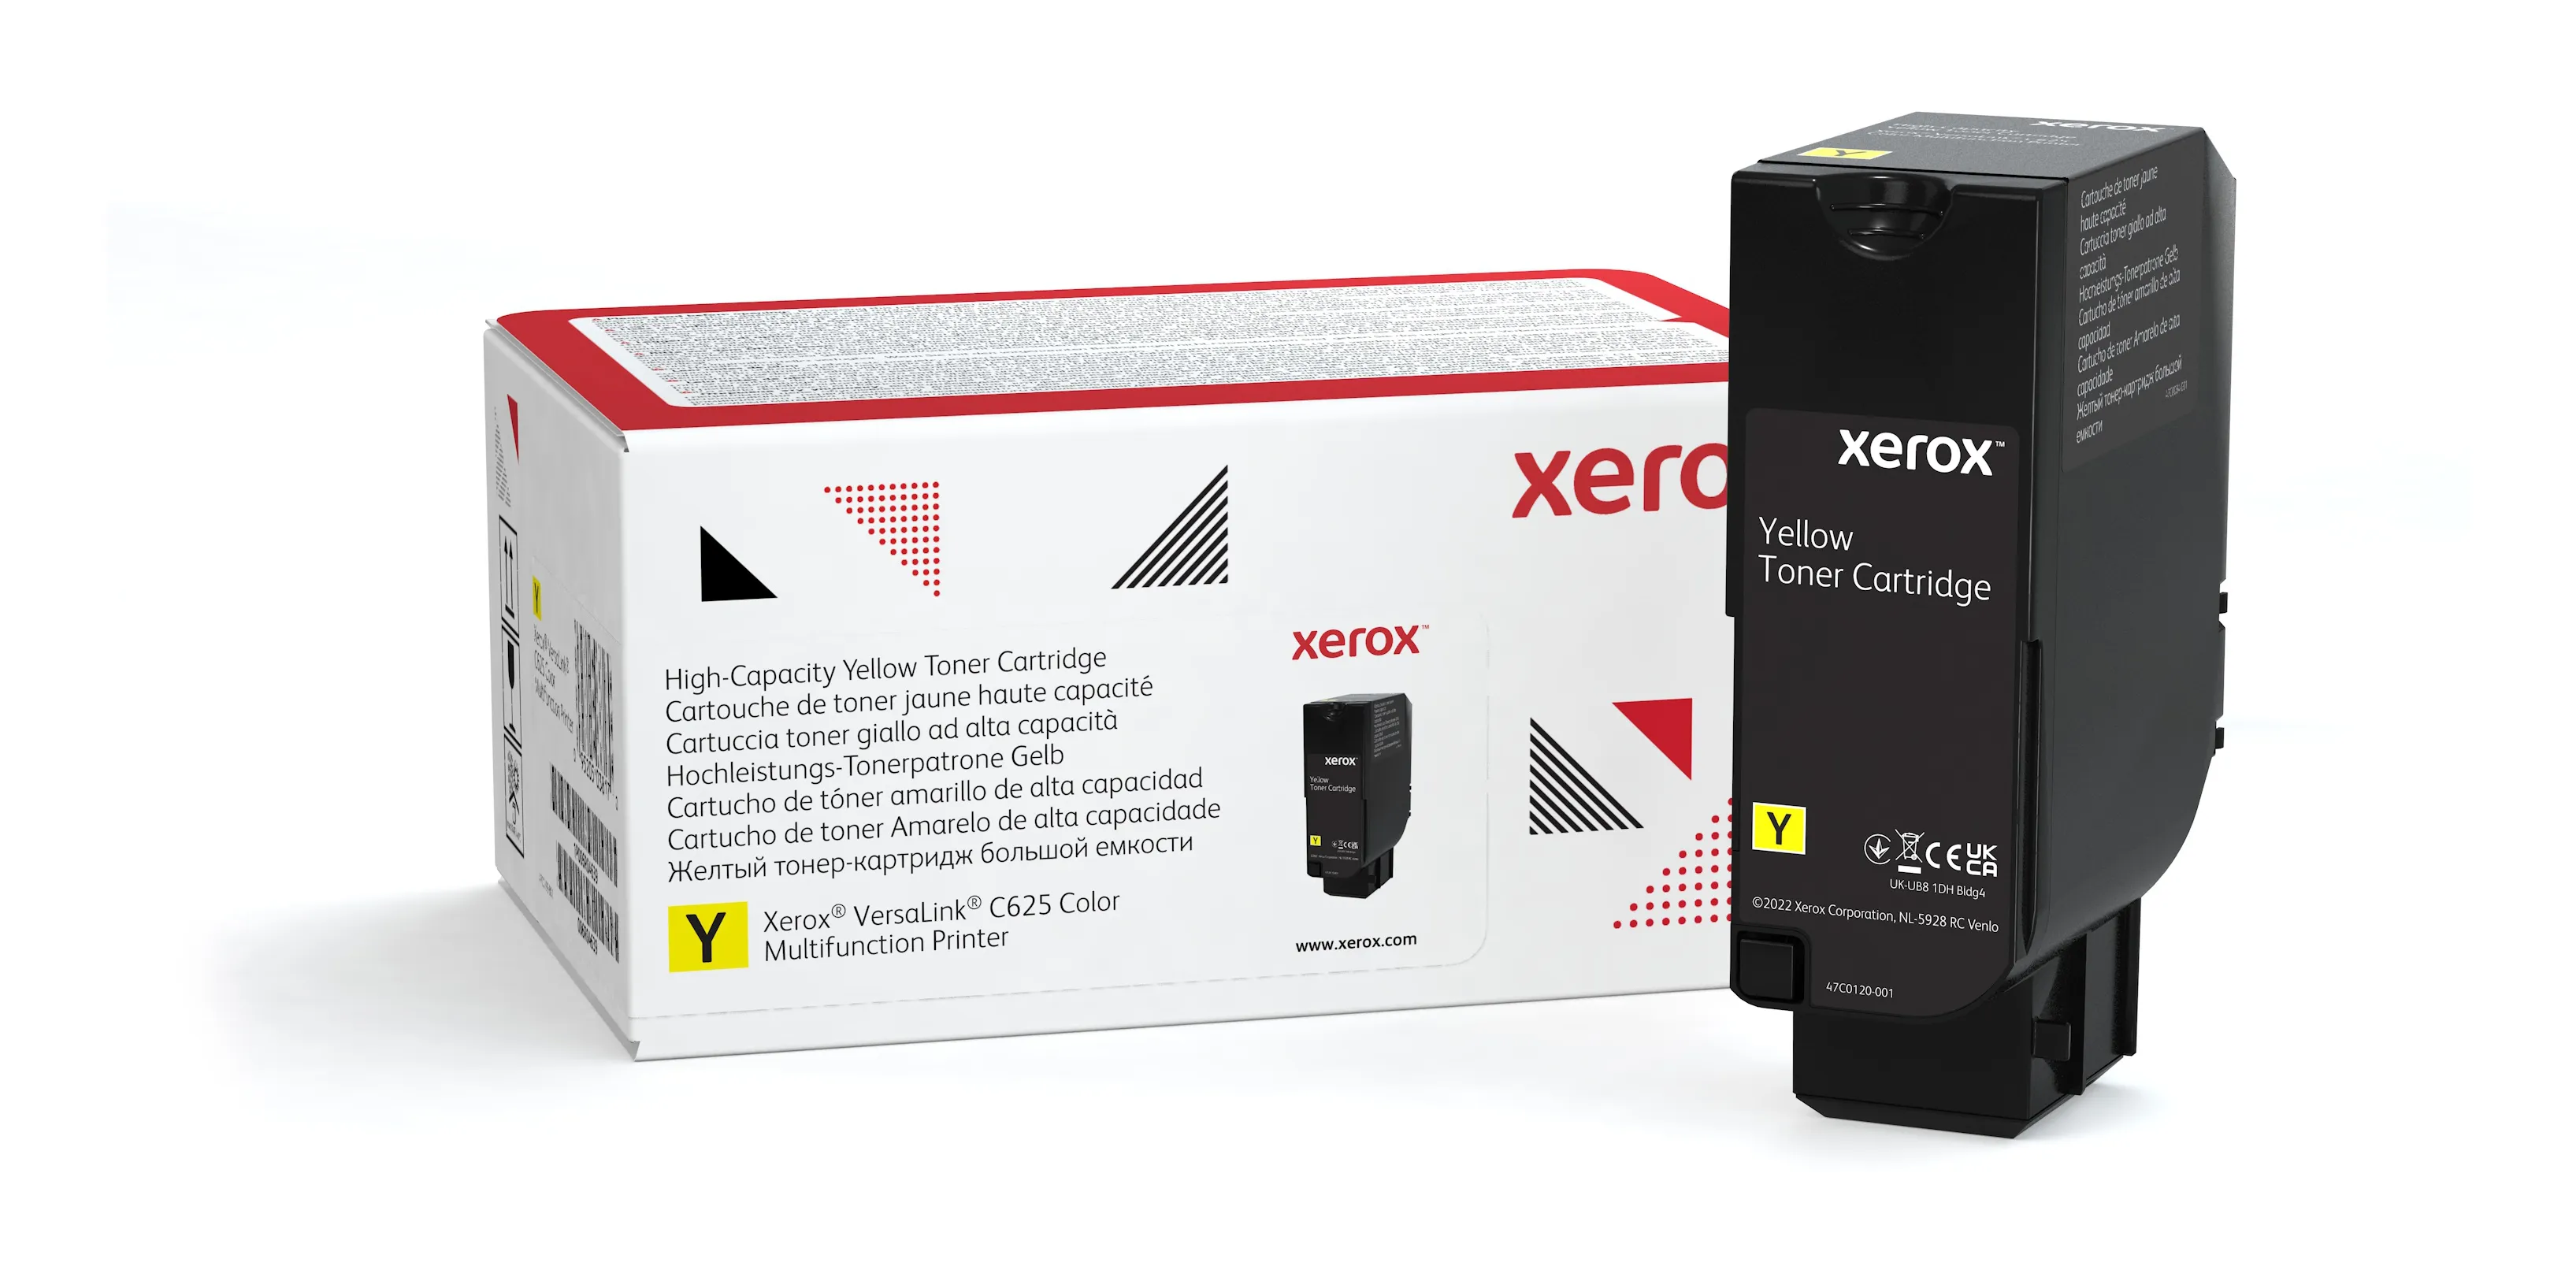 Achat XEROX VersaLink C625 Yellow High Capacity Toner Cartridge au meilleur prix